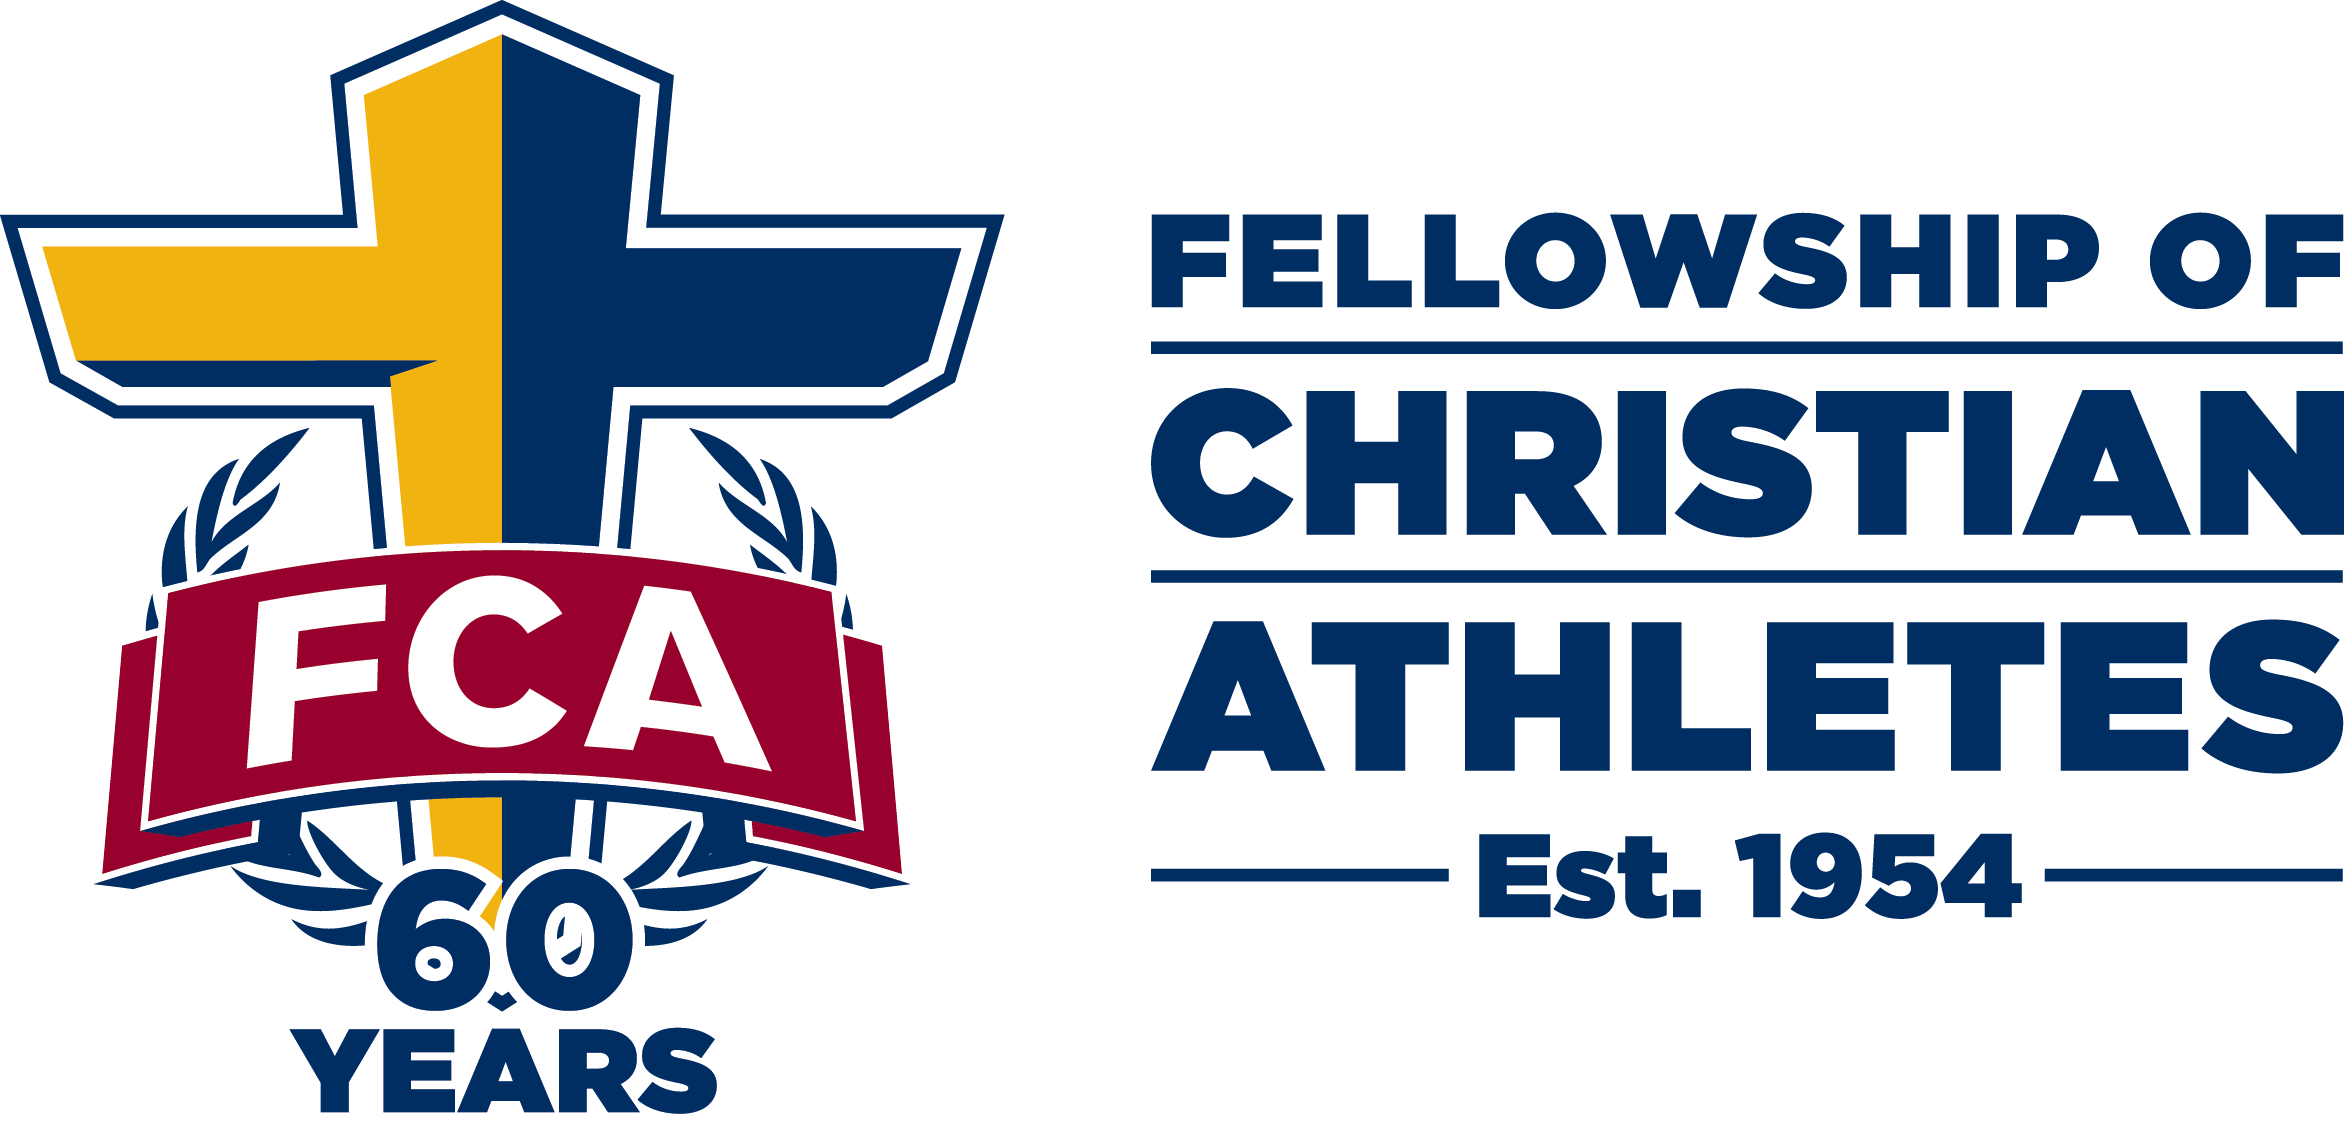 Fellowship of Christian Athletes Logo - FCA Updates Logos | Fellowship of Christian Athletes | FCA Timeline